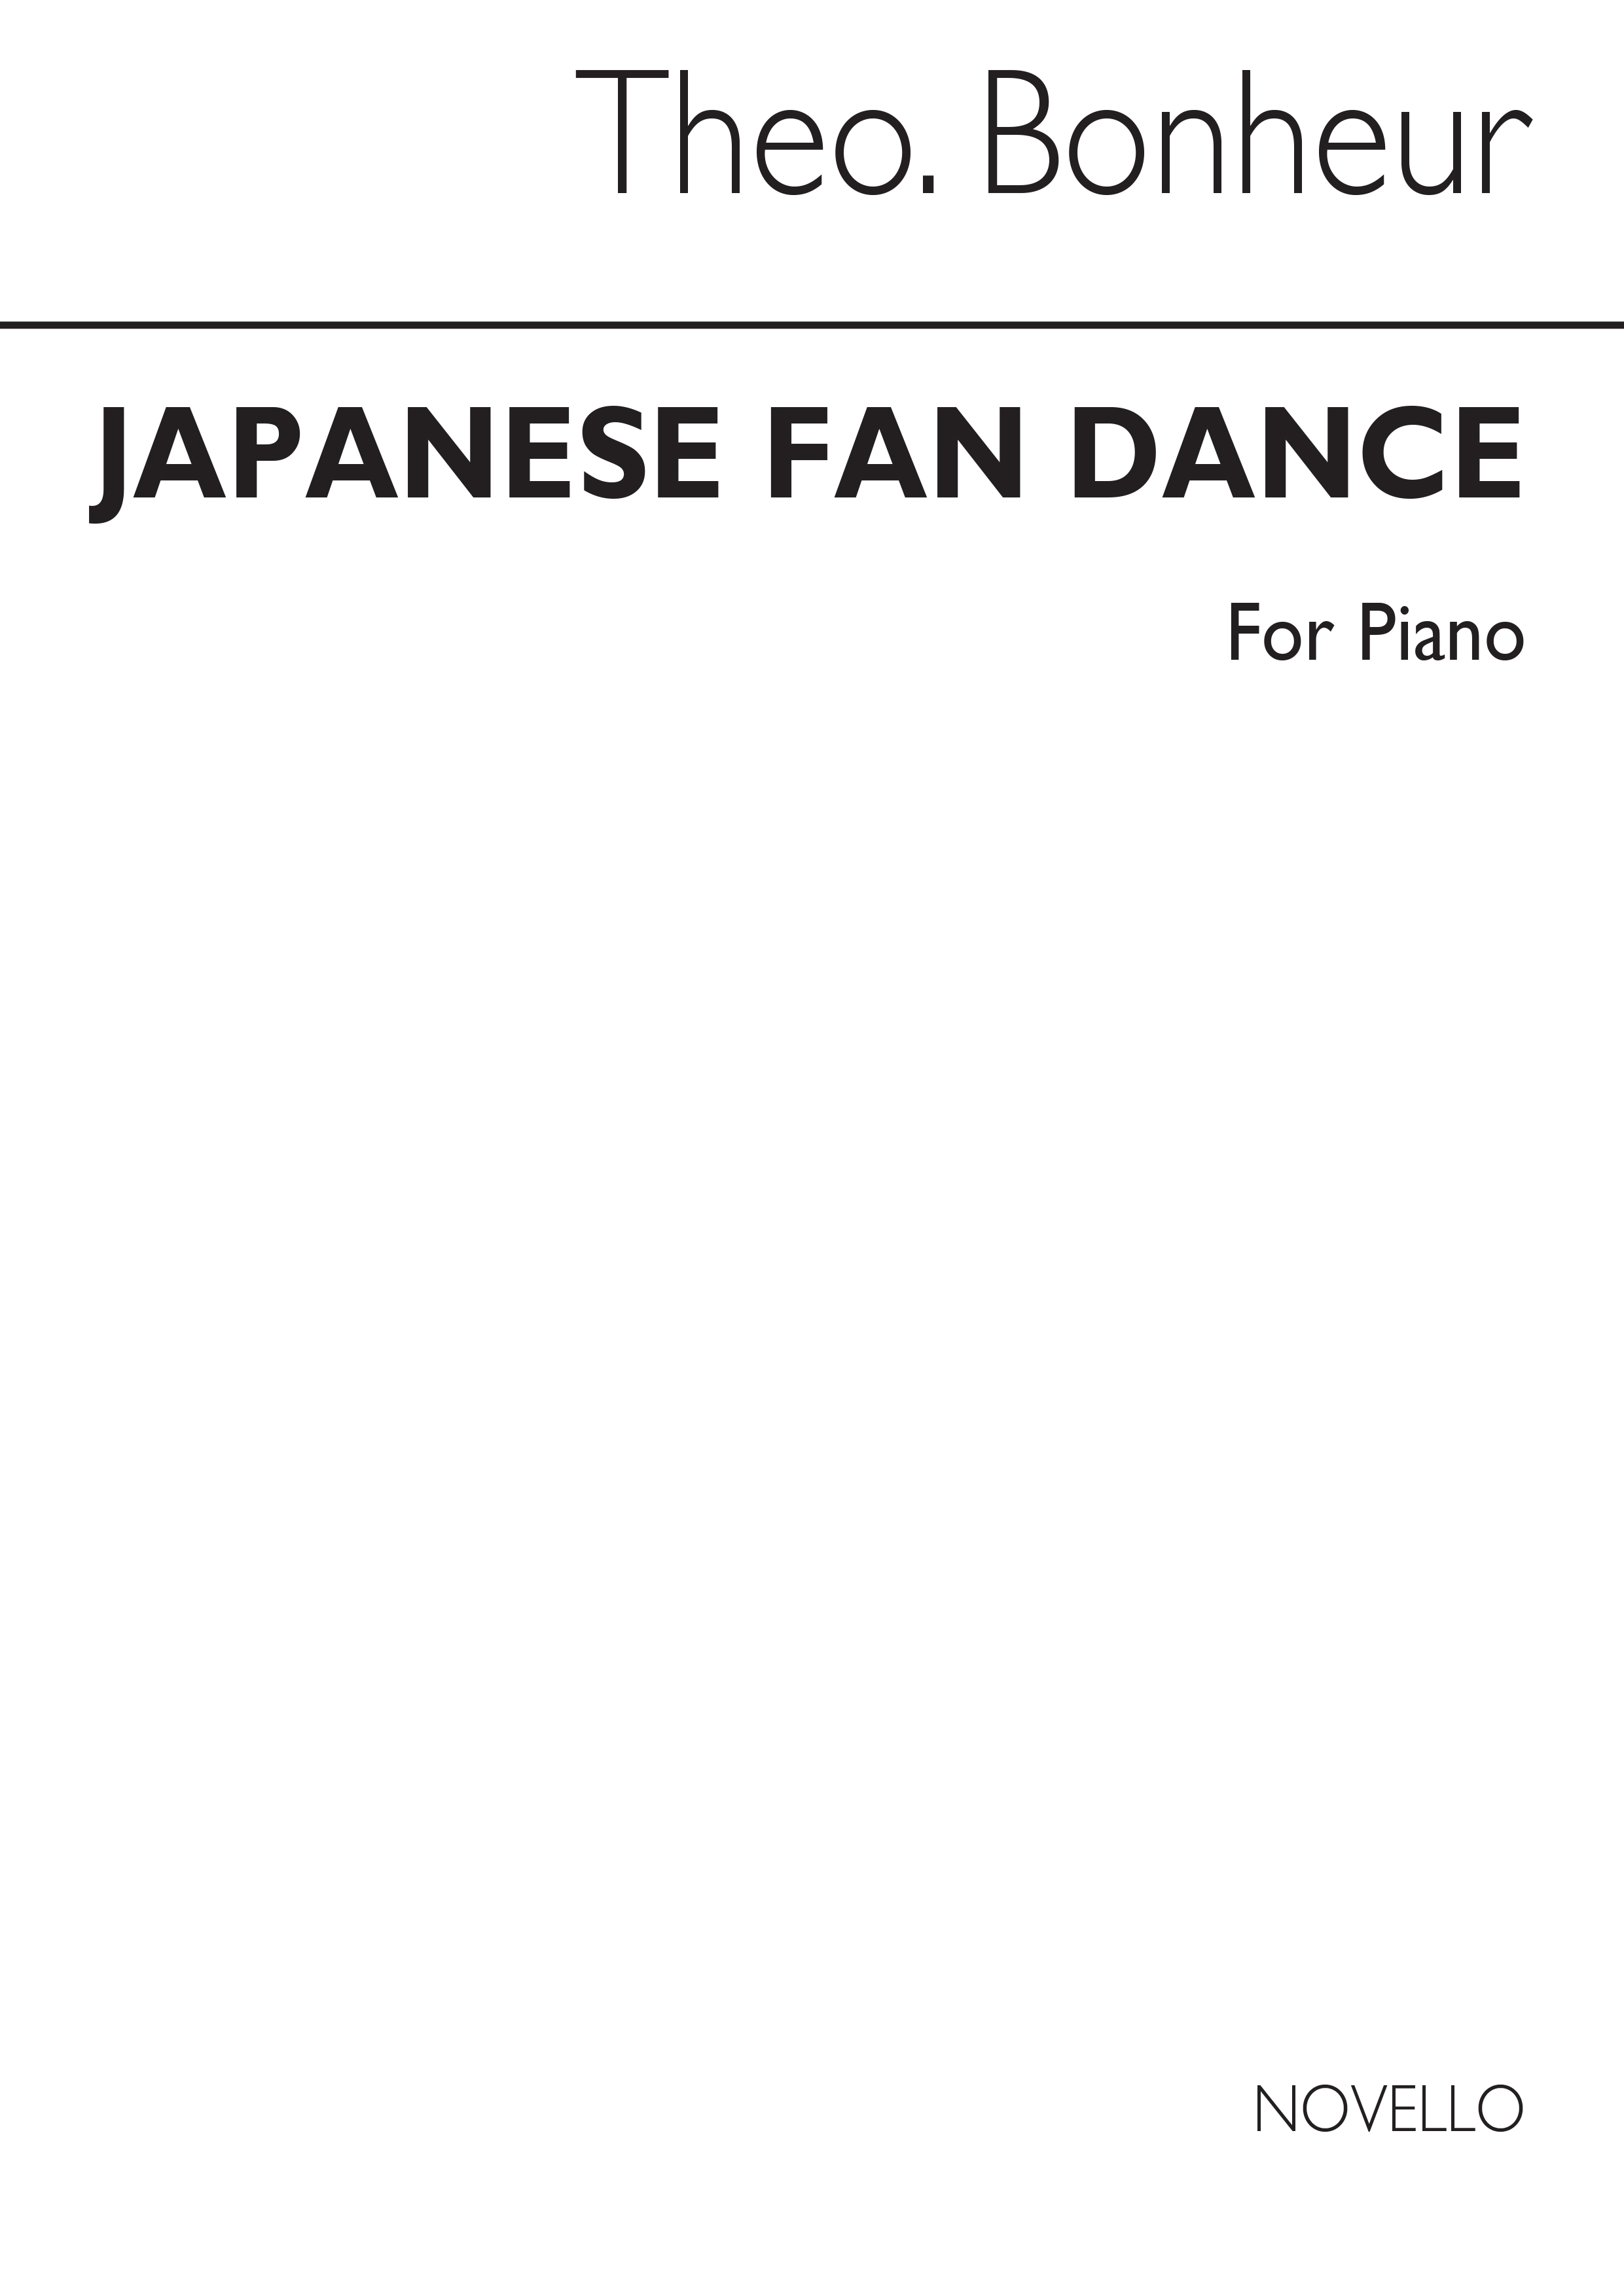 Bonheur Japanese Fan Dance Piano